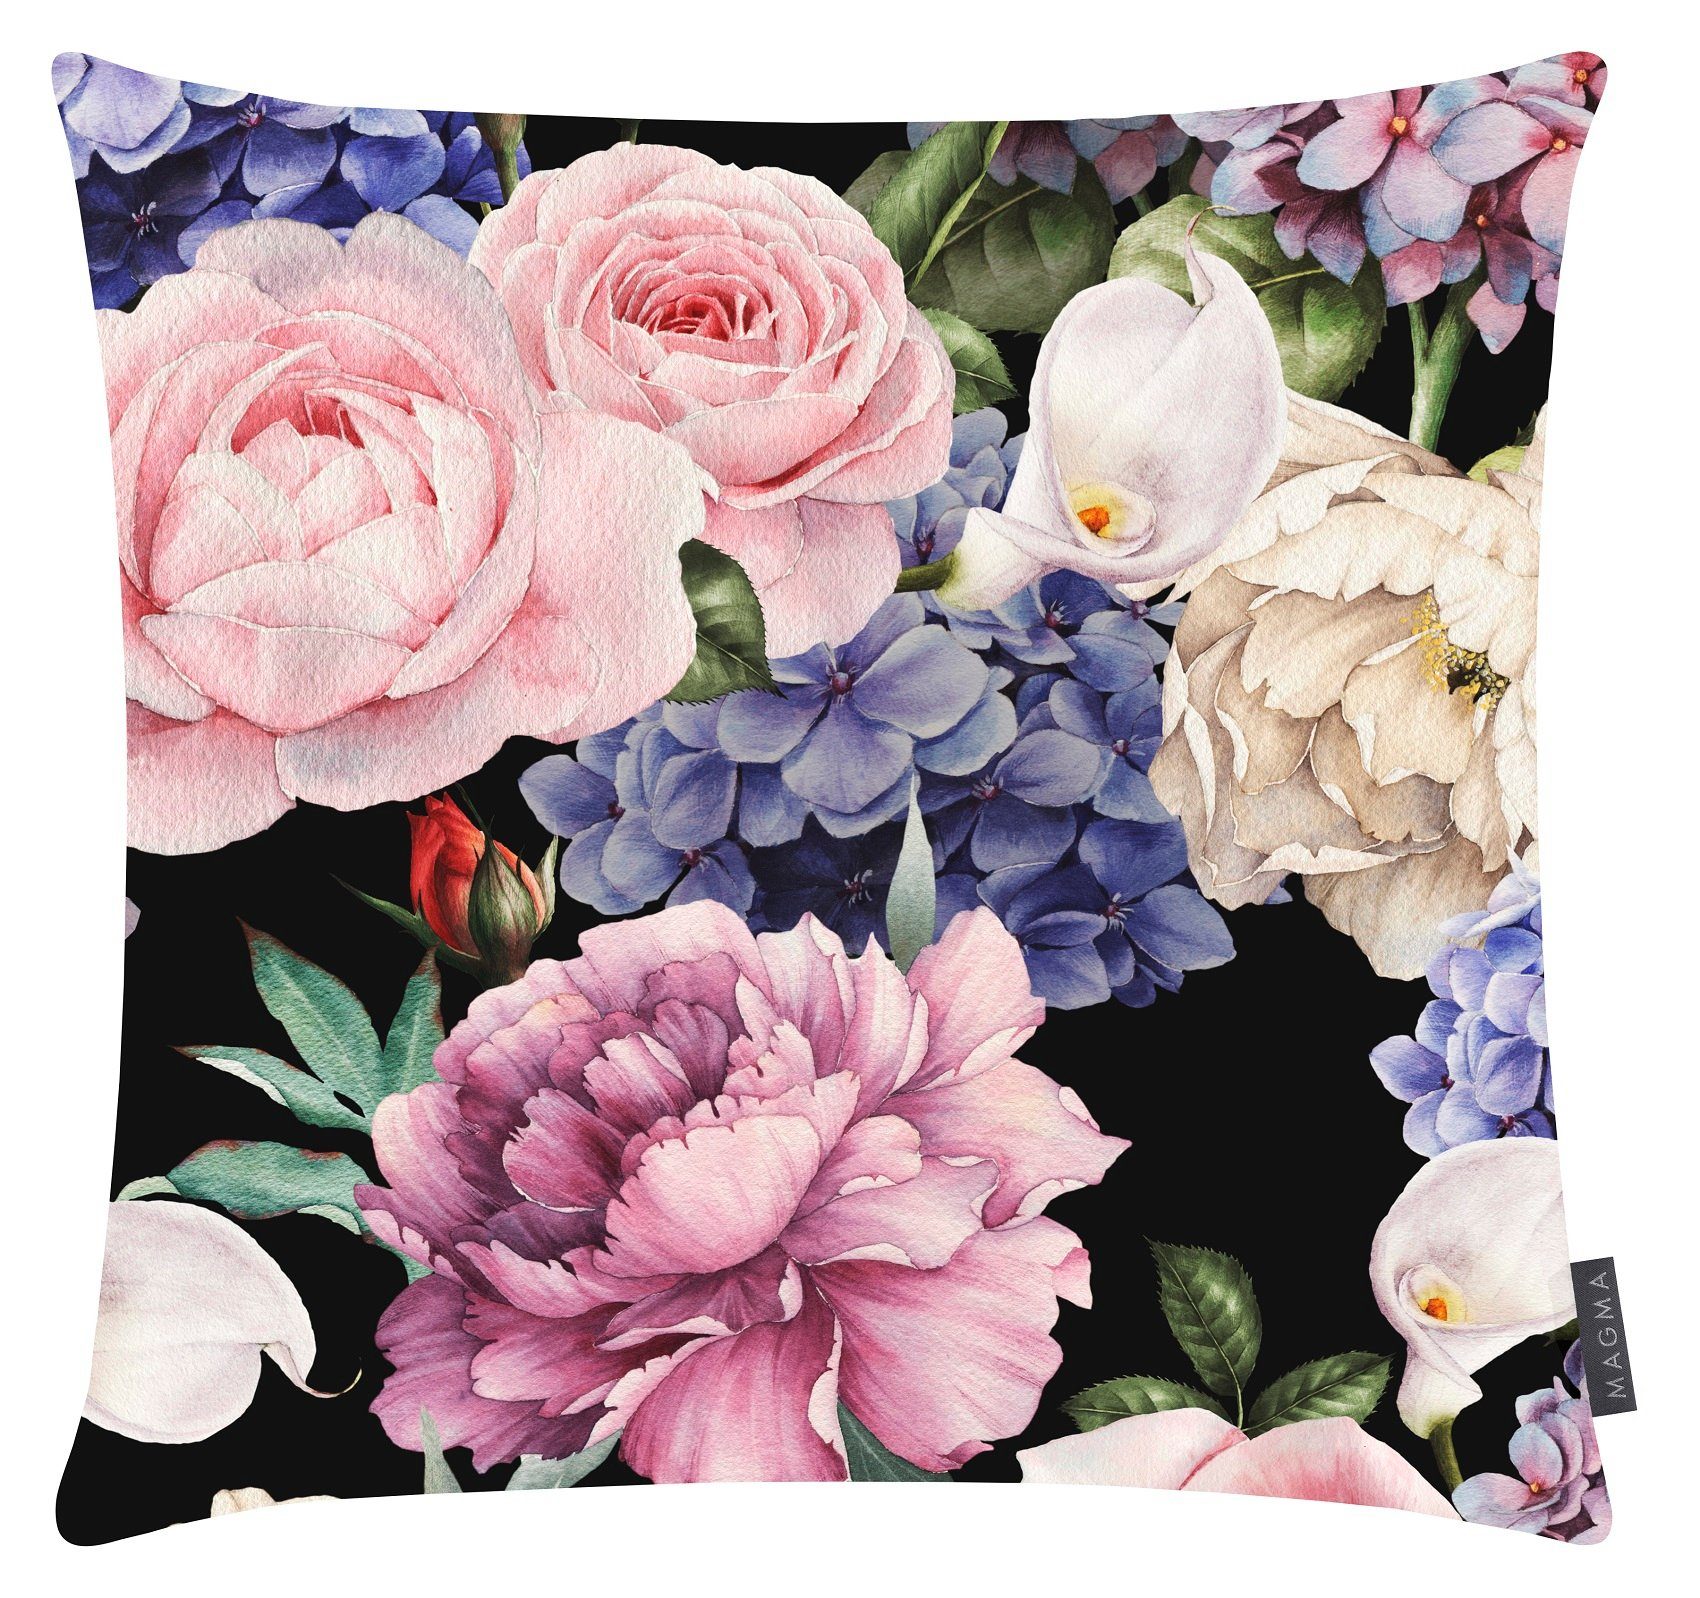 Kissenhülle soft schönen Blütenpracht mit samt Digitaldruck Heimtex weicher Feeling, Dori Blumige Magma Blumen Kissenhülle Bezug